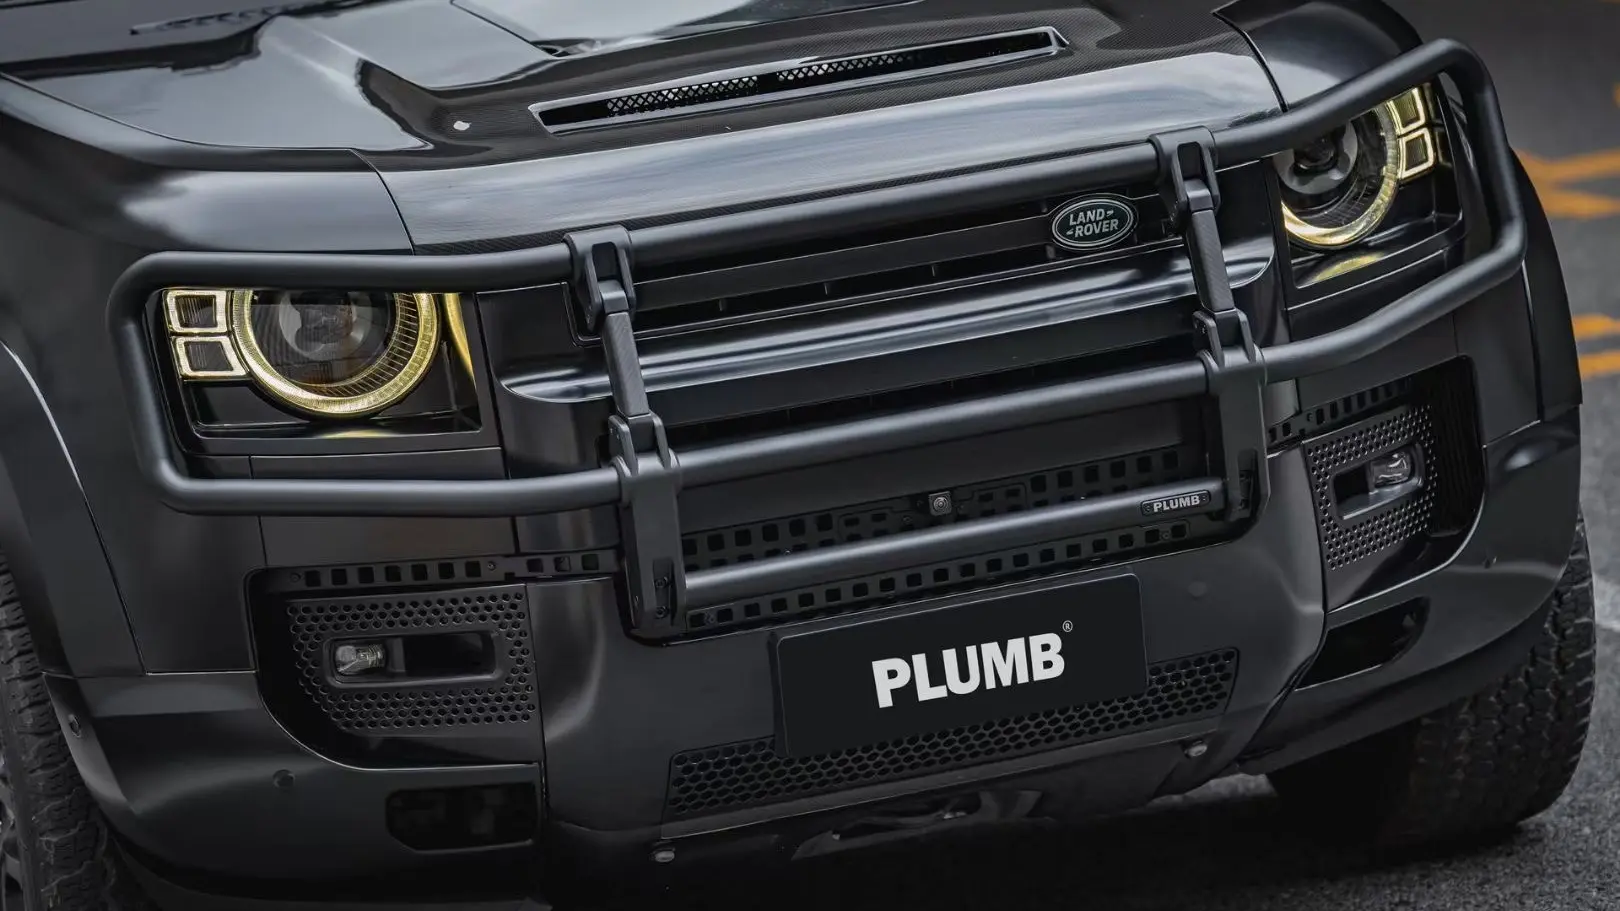 PLUMB Front Bumper Bull Bar for Land Rover Defender Image